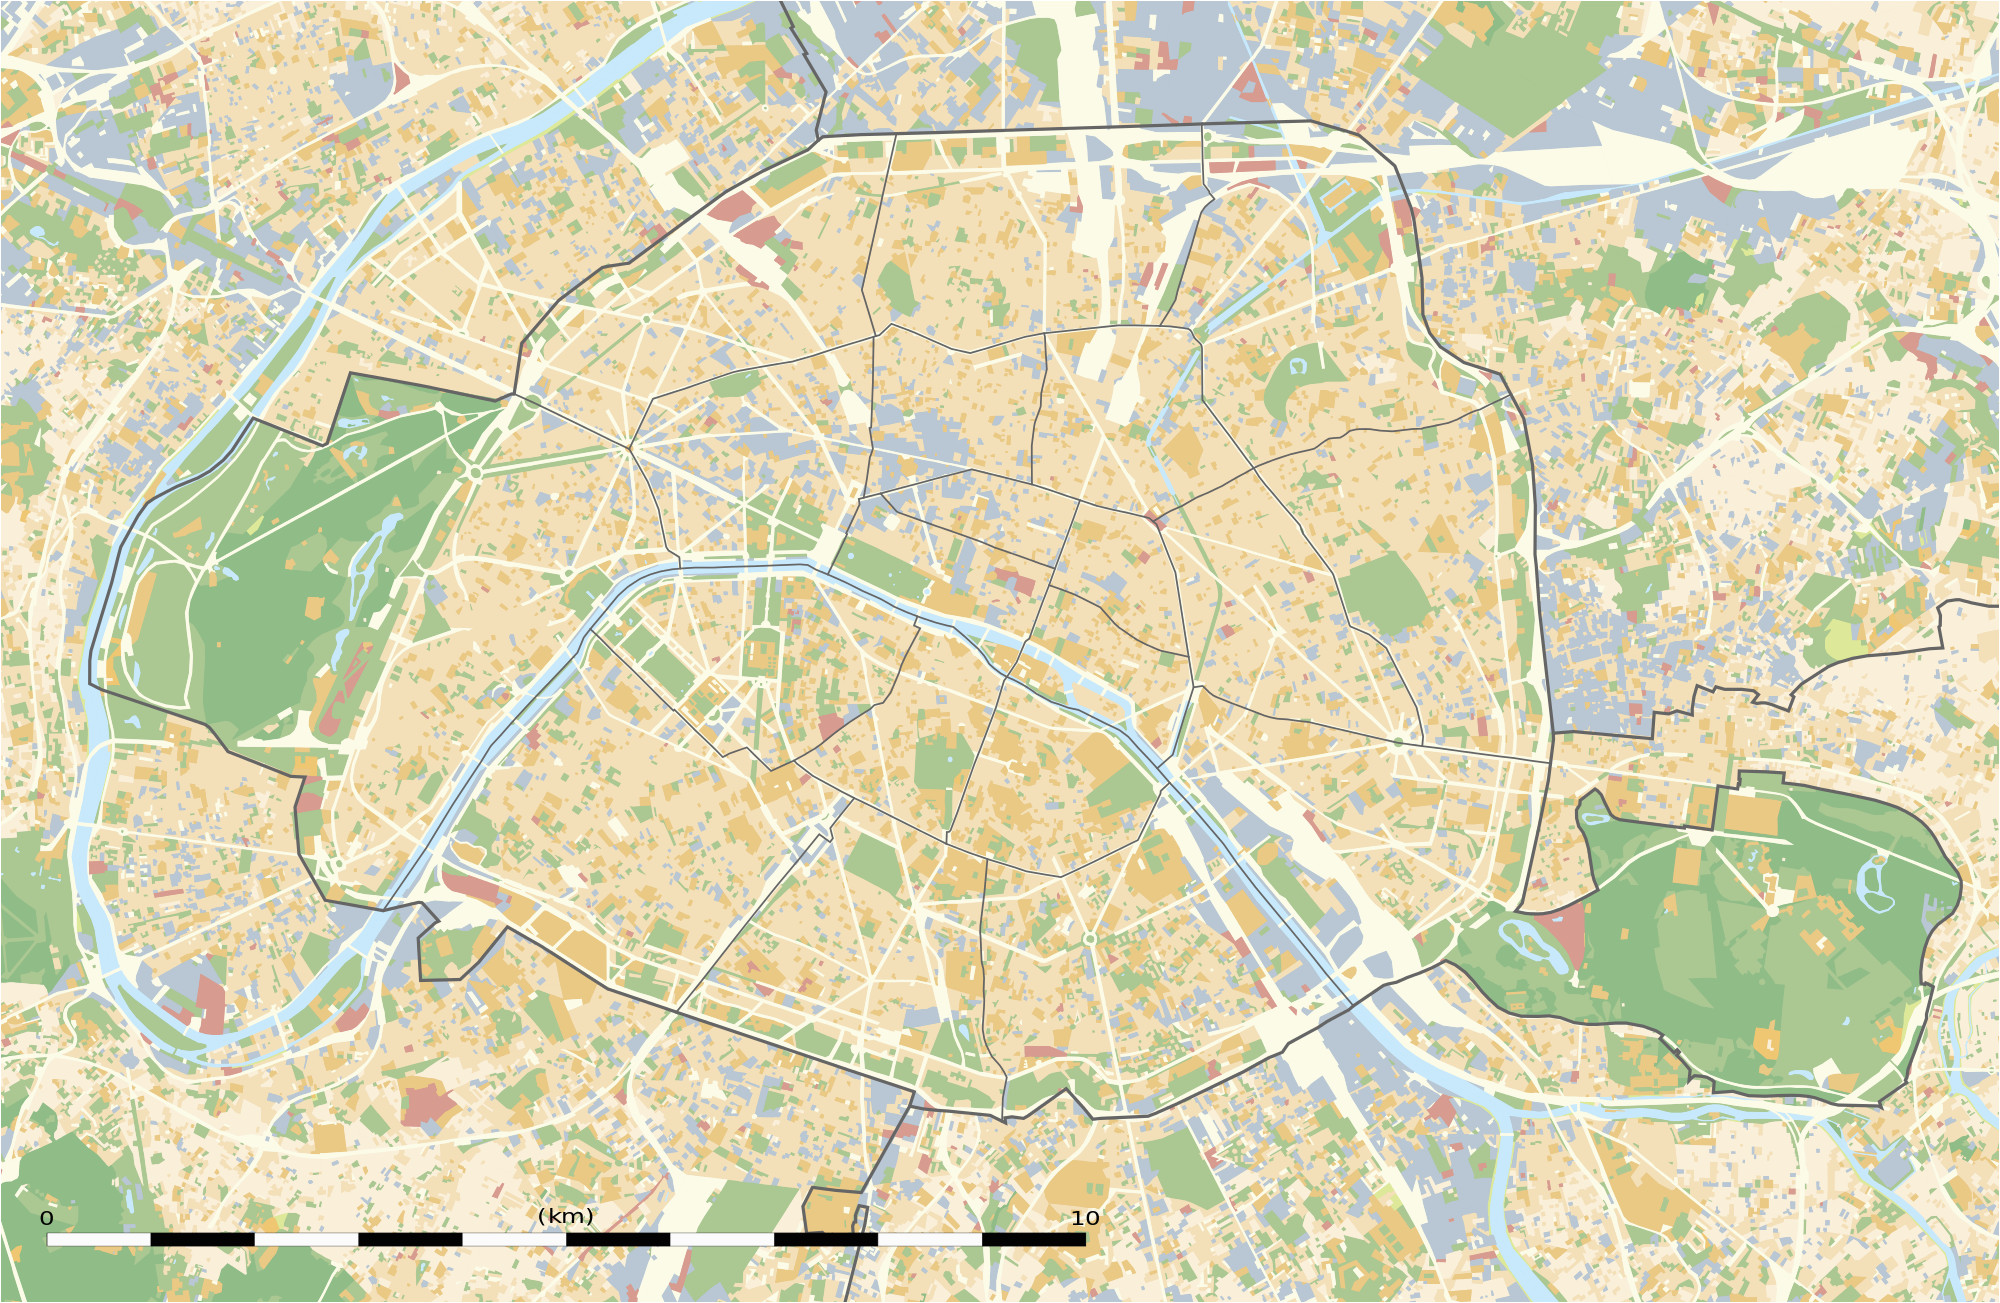 street-map-of-paris-france-printable-secretmuseum